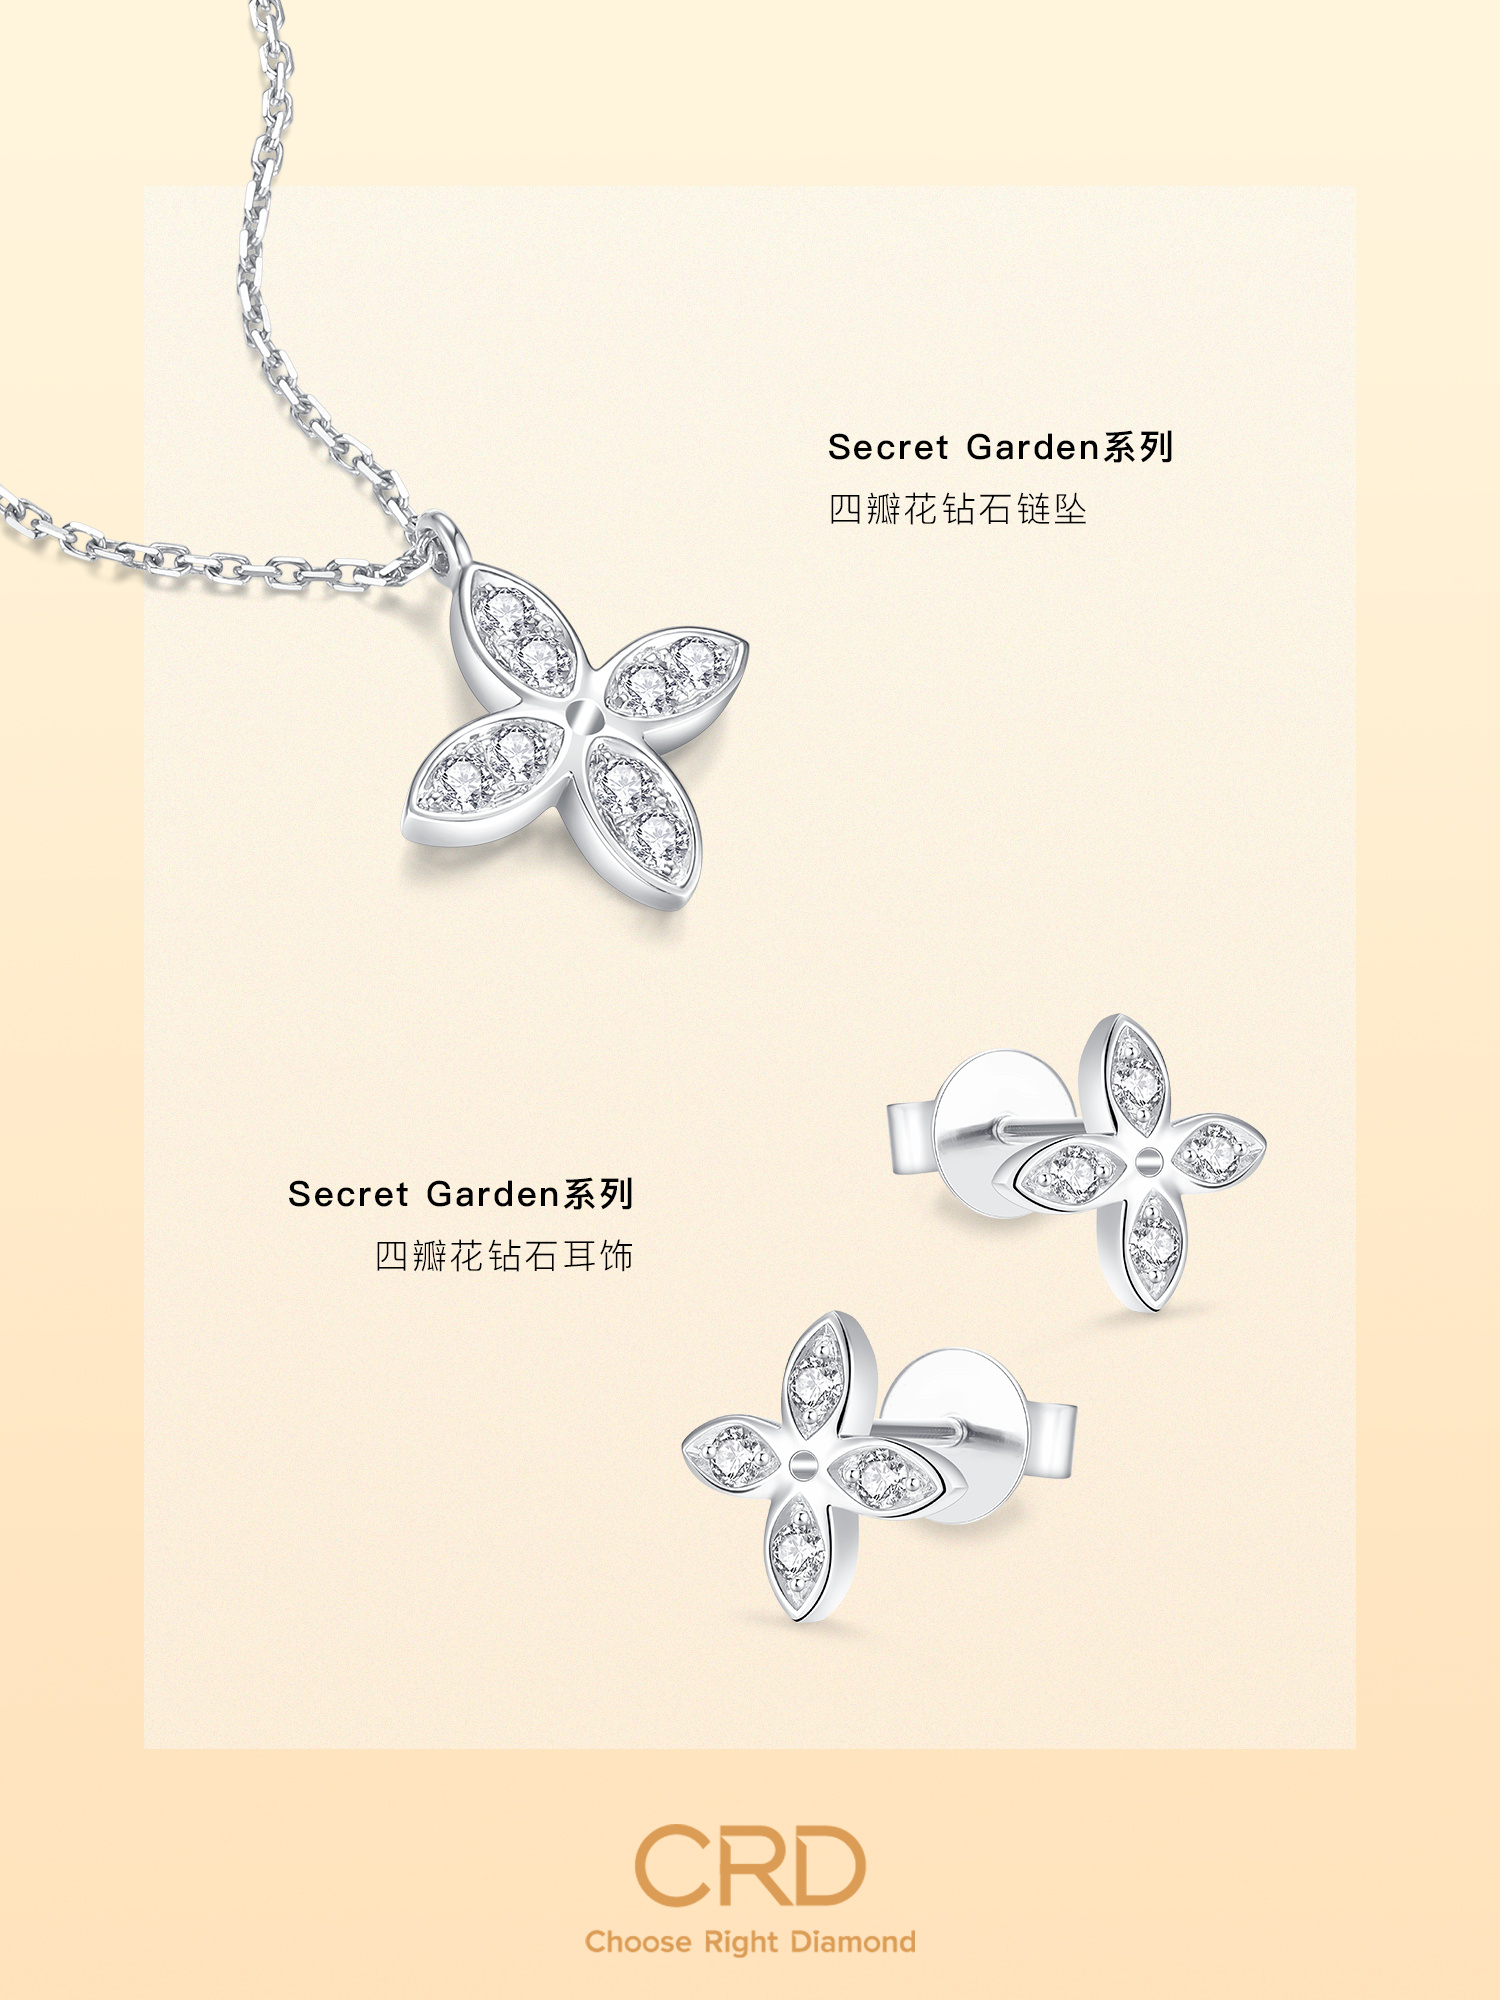 CRD克徕帝品牌代言人张若昀一起邂逅CRD Secret Garden系列珠宝